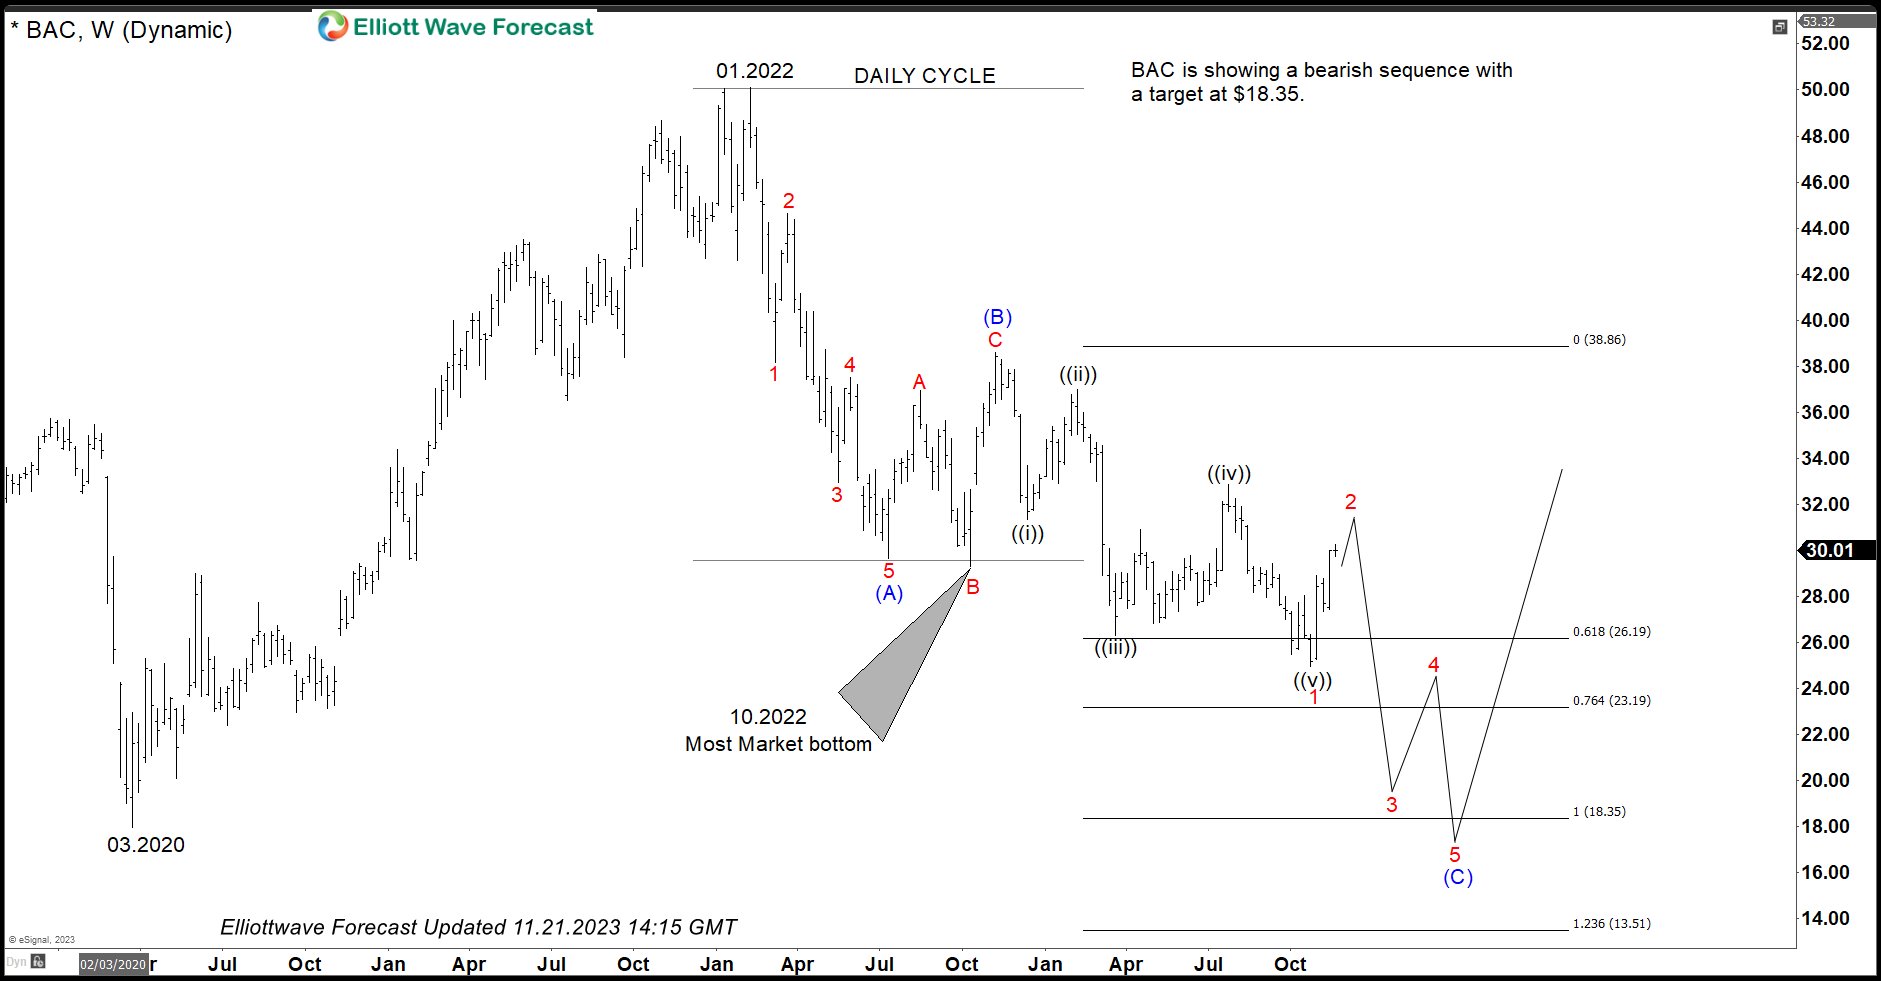 Bank of America (BAC) Long-term Elliott Wave Sequence